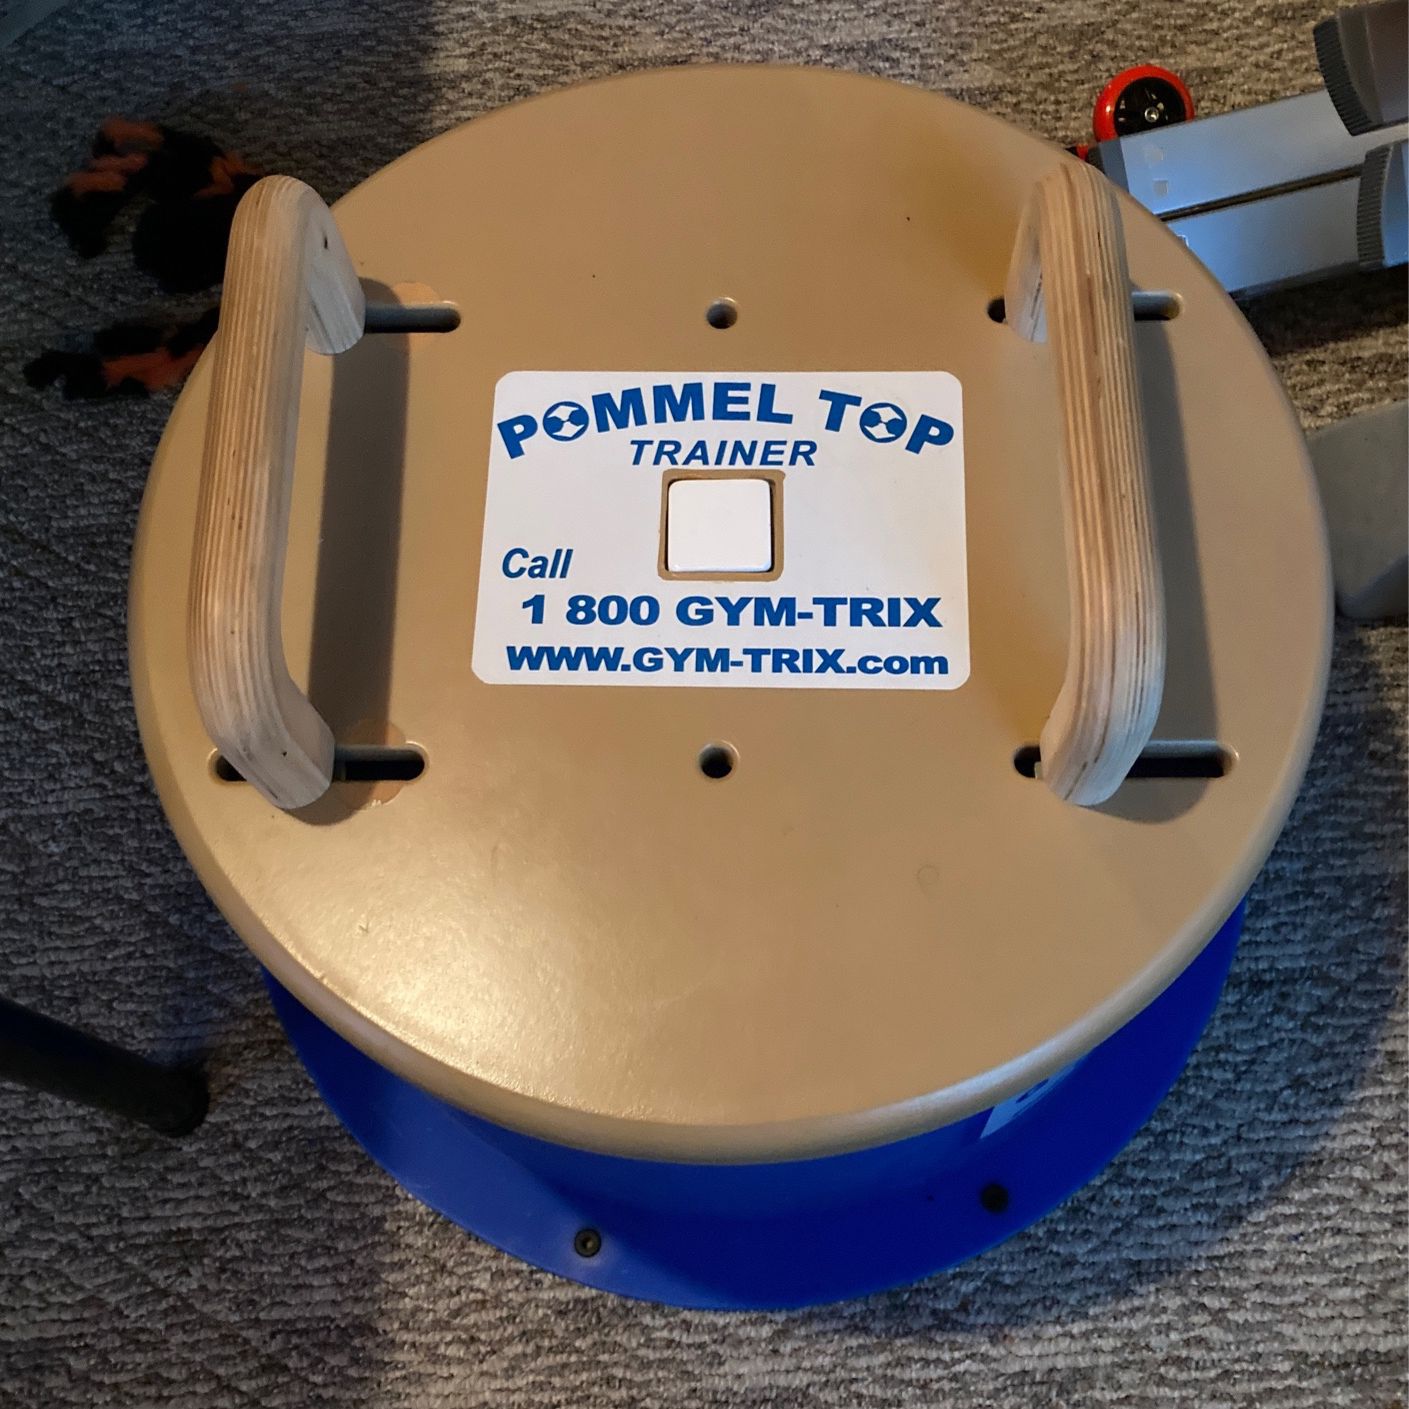 Gym-Tri x Equipment Ultra Dome